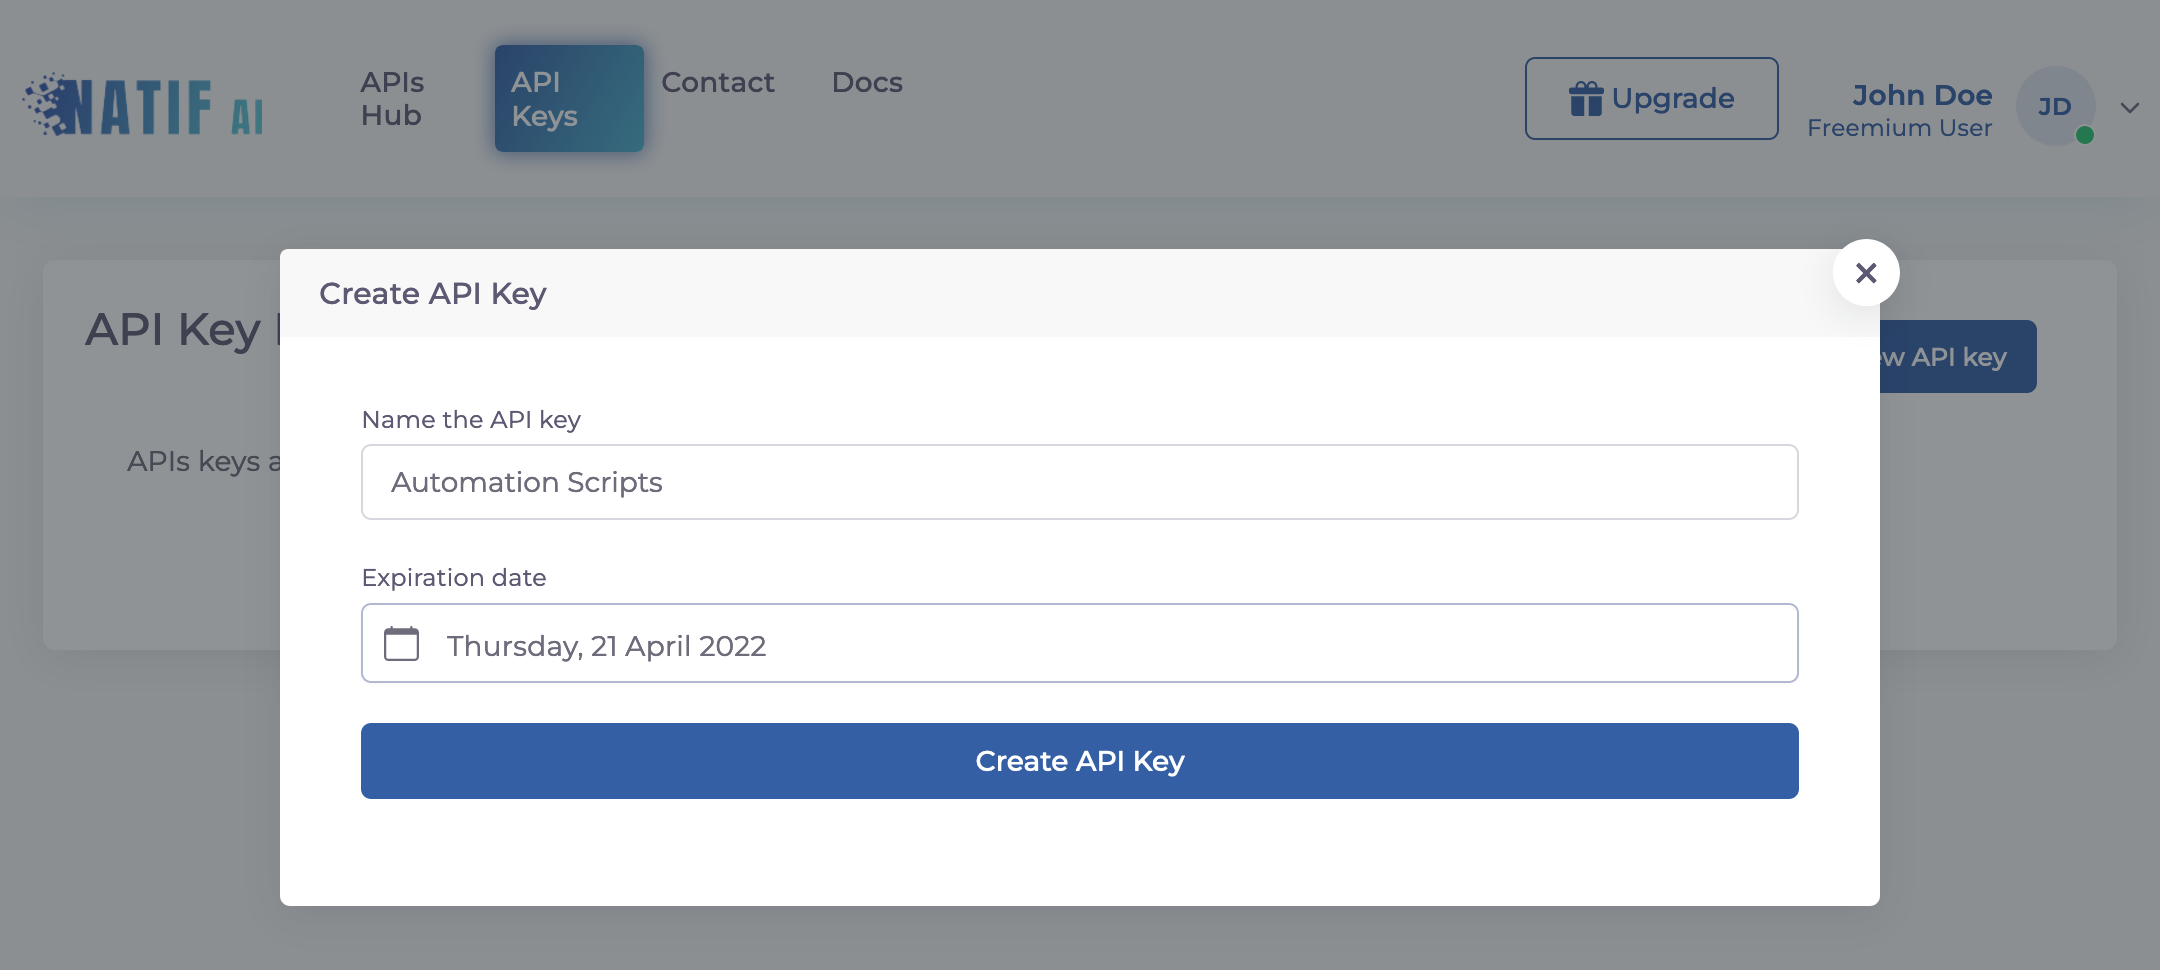 Image Screenshot of the API key creation form